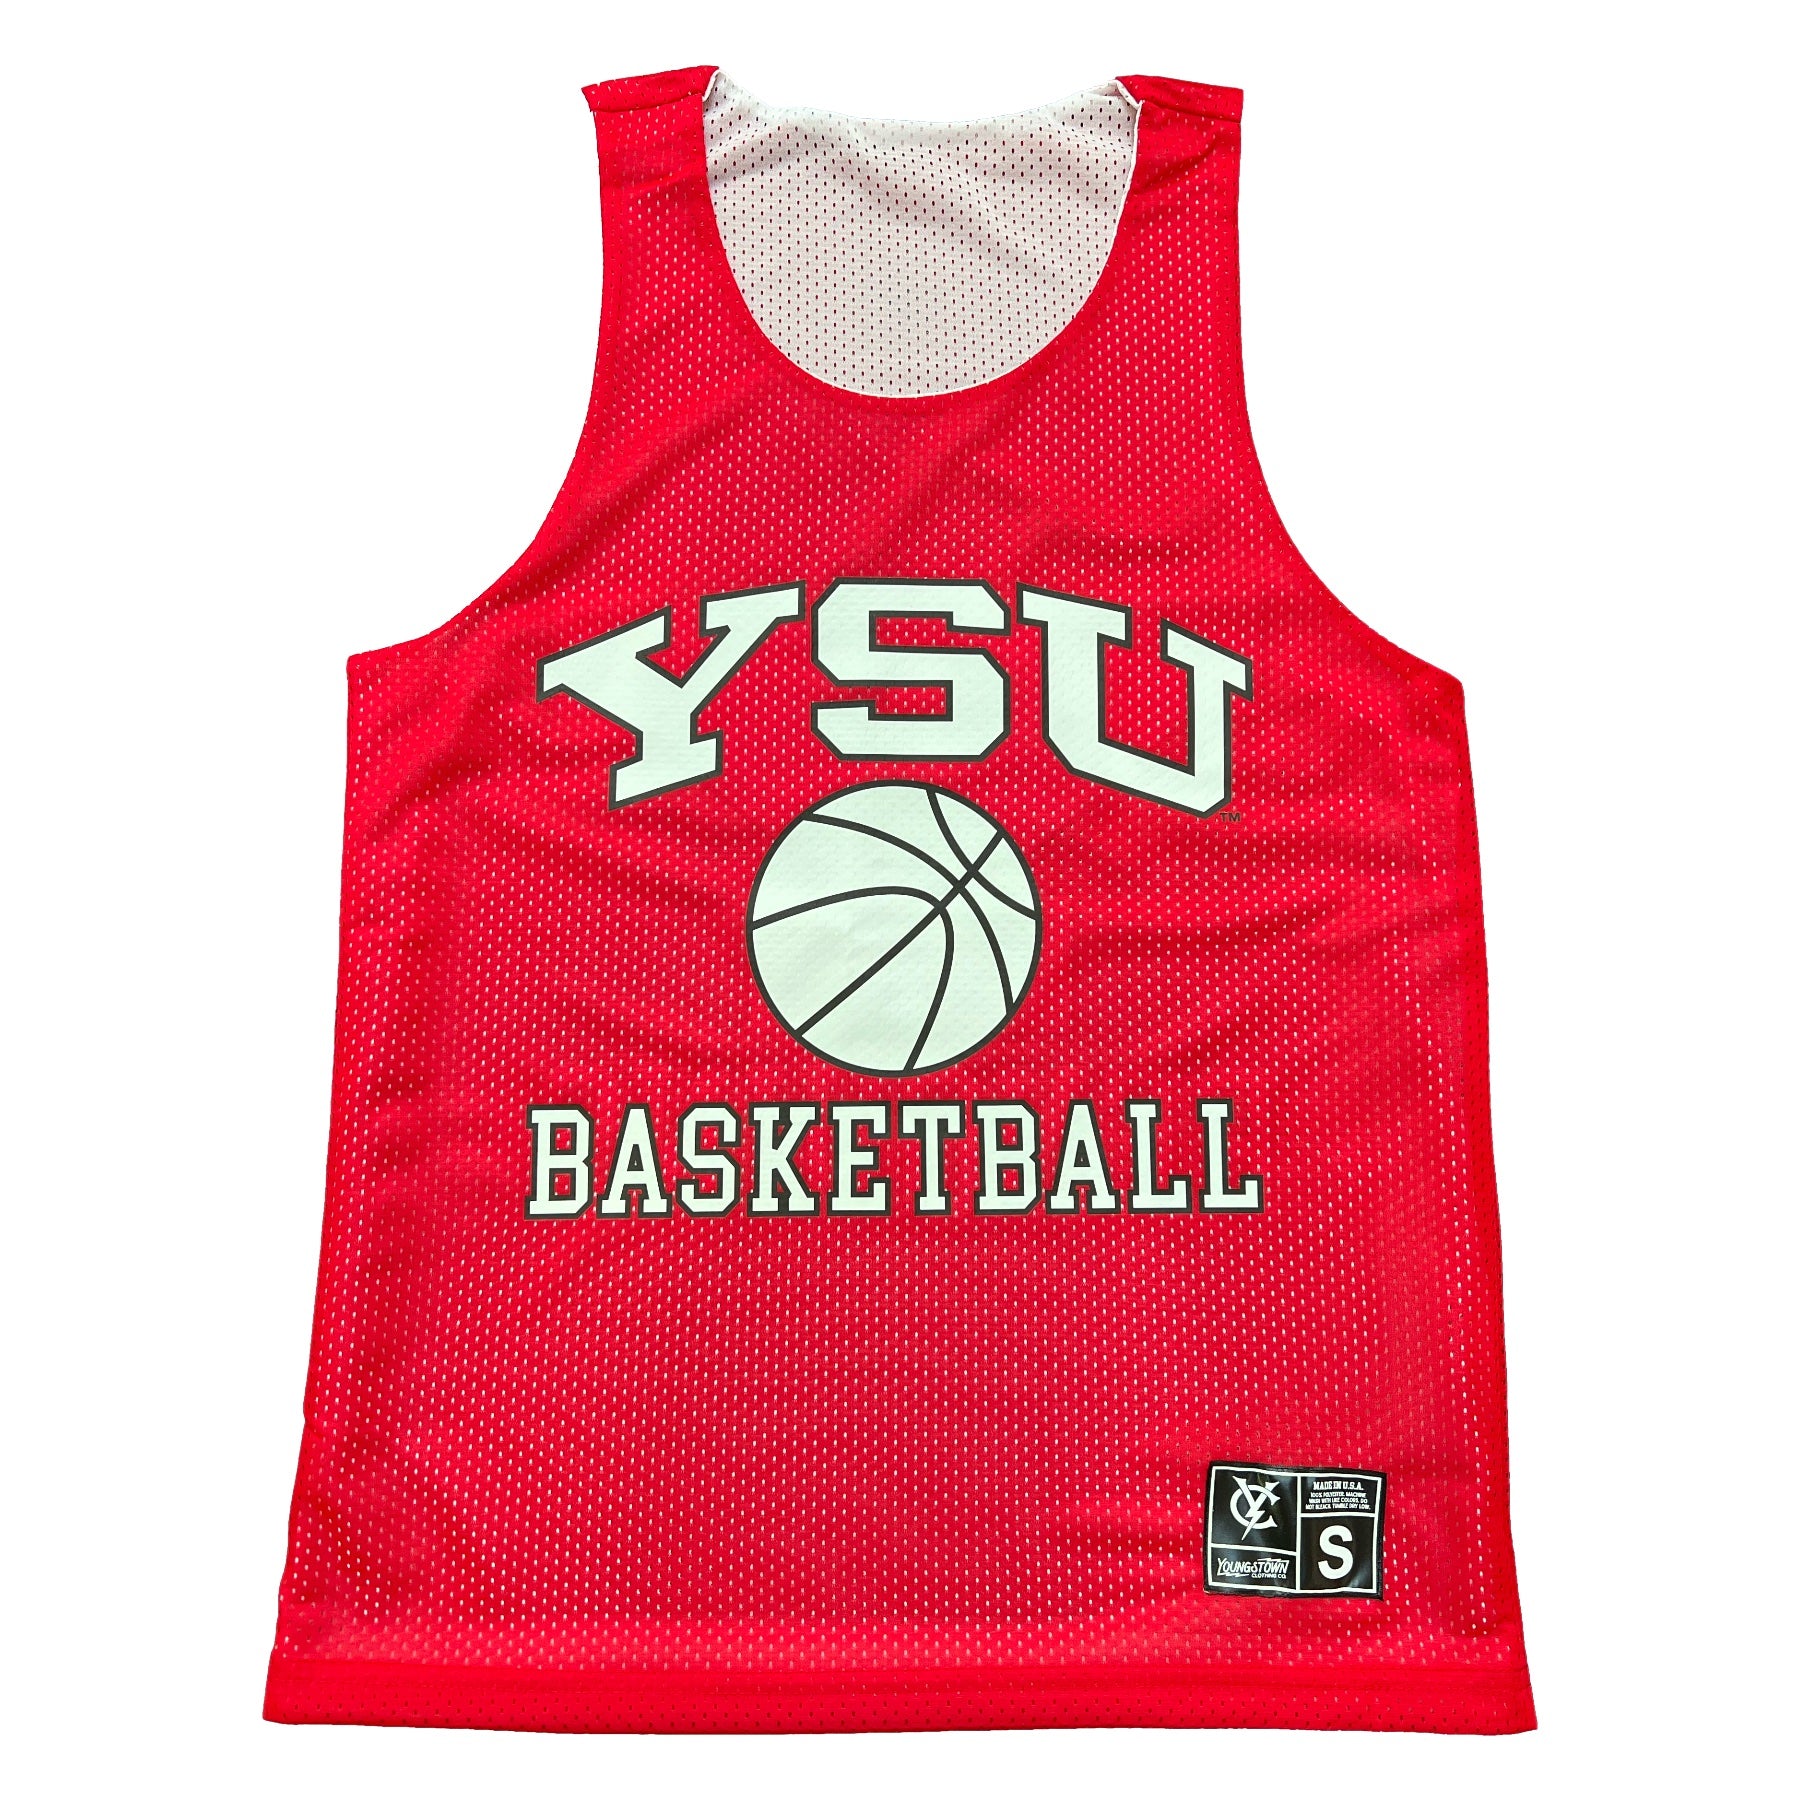 YSU Youngstown State Reversible Basketball Jersey L